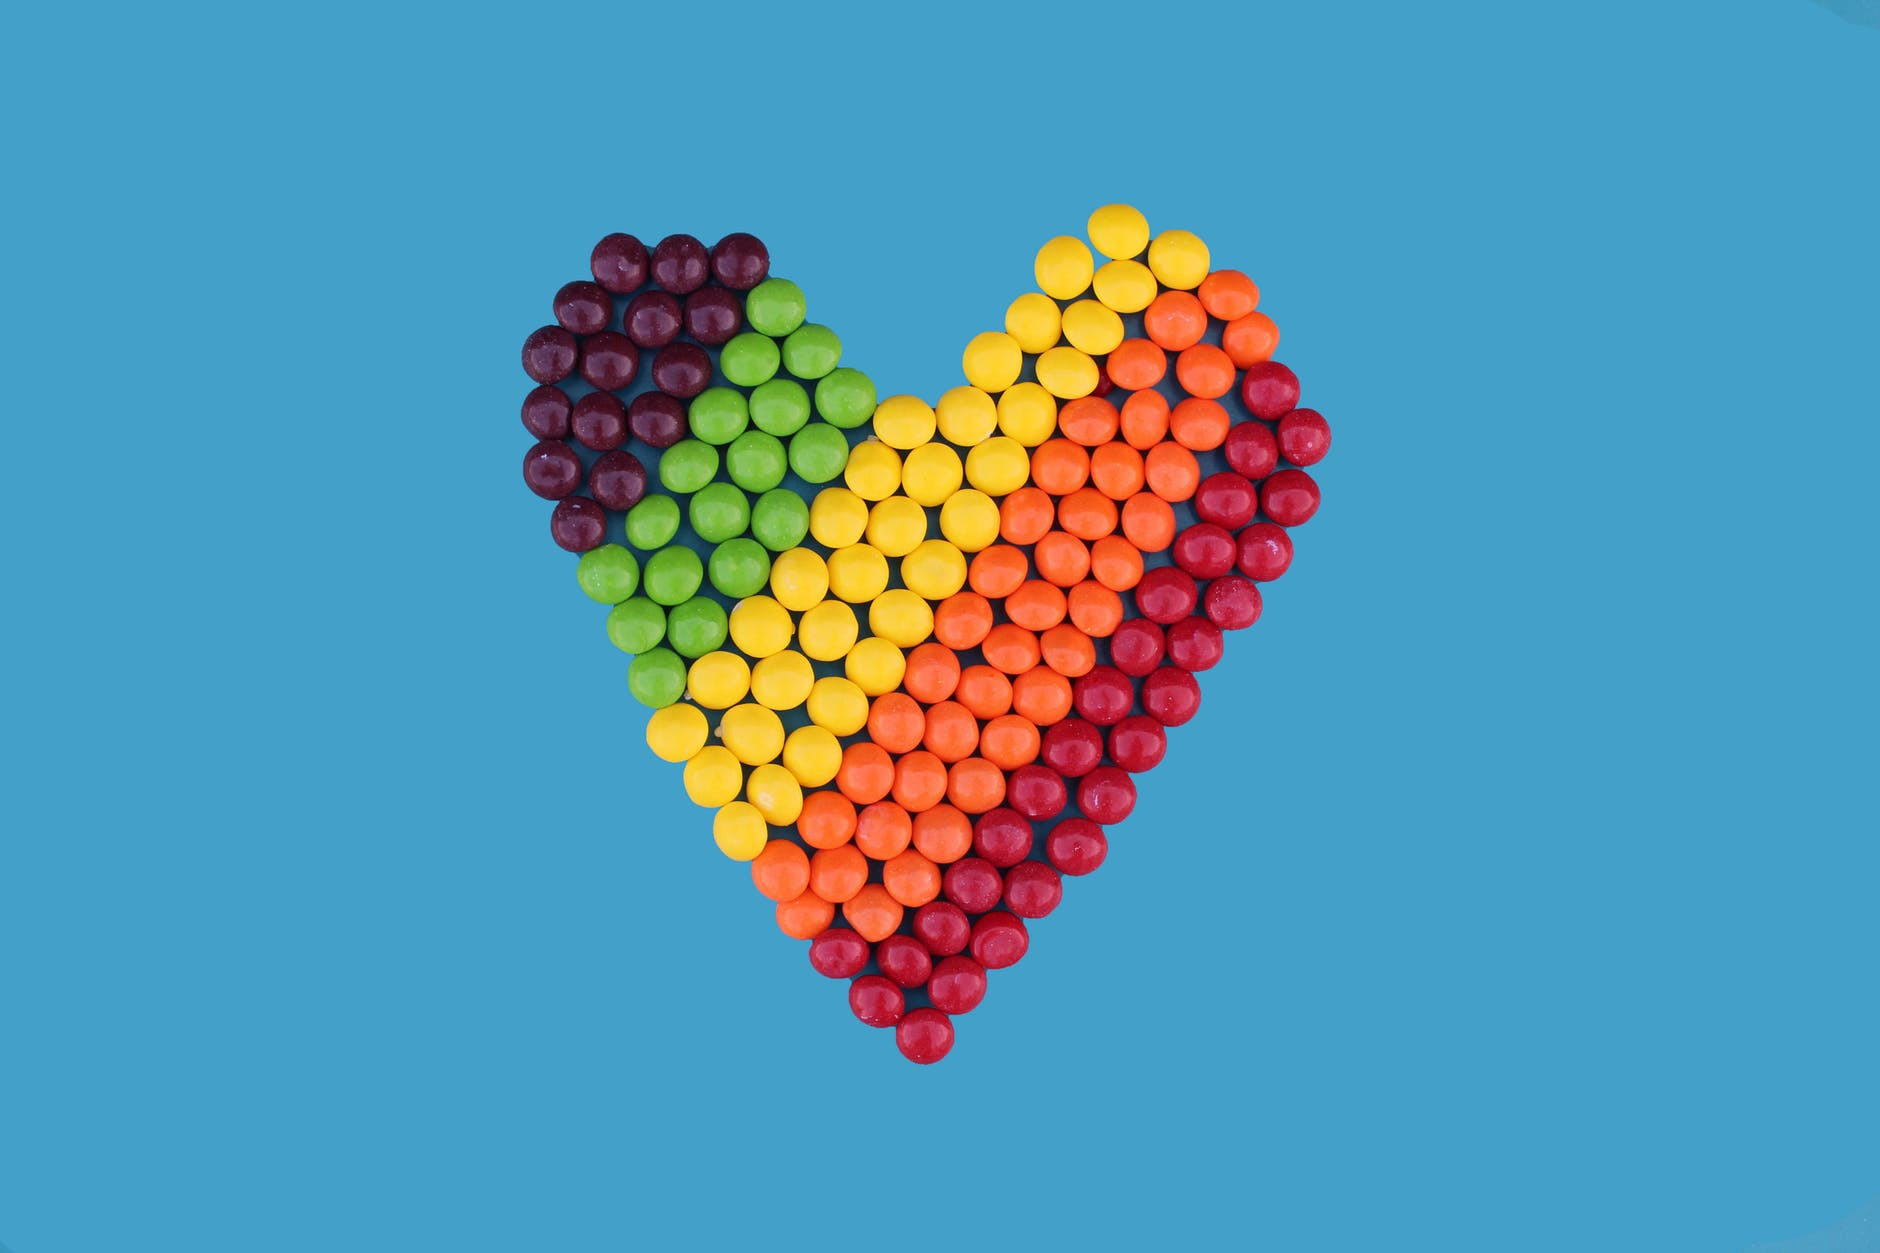 Rainbow Heart